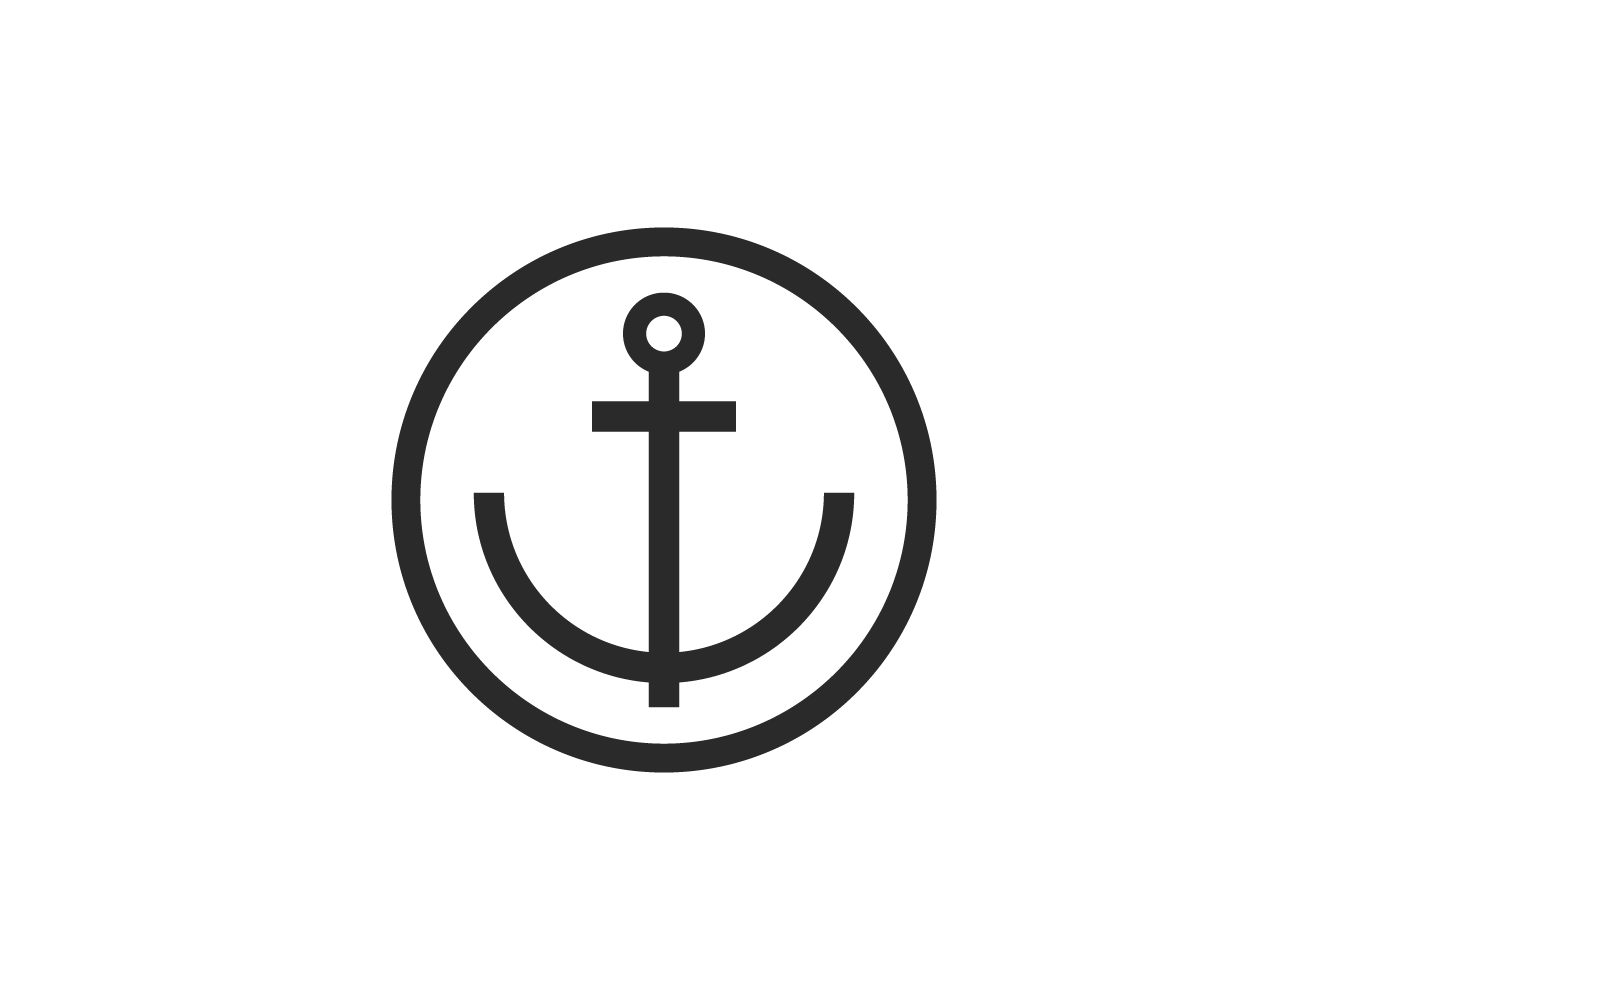 Anchor logo illustration vector design